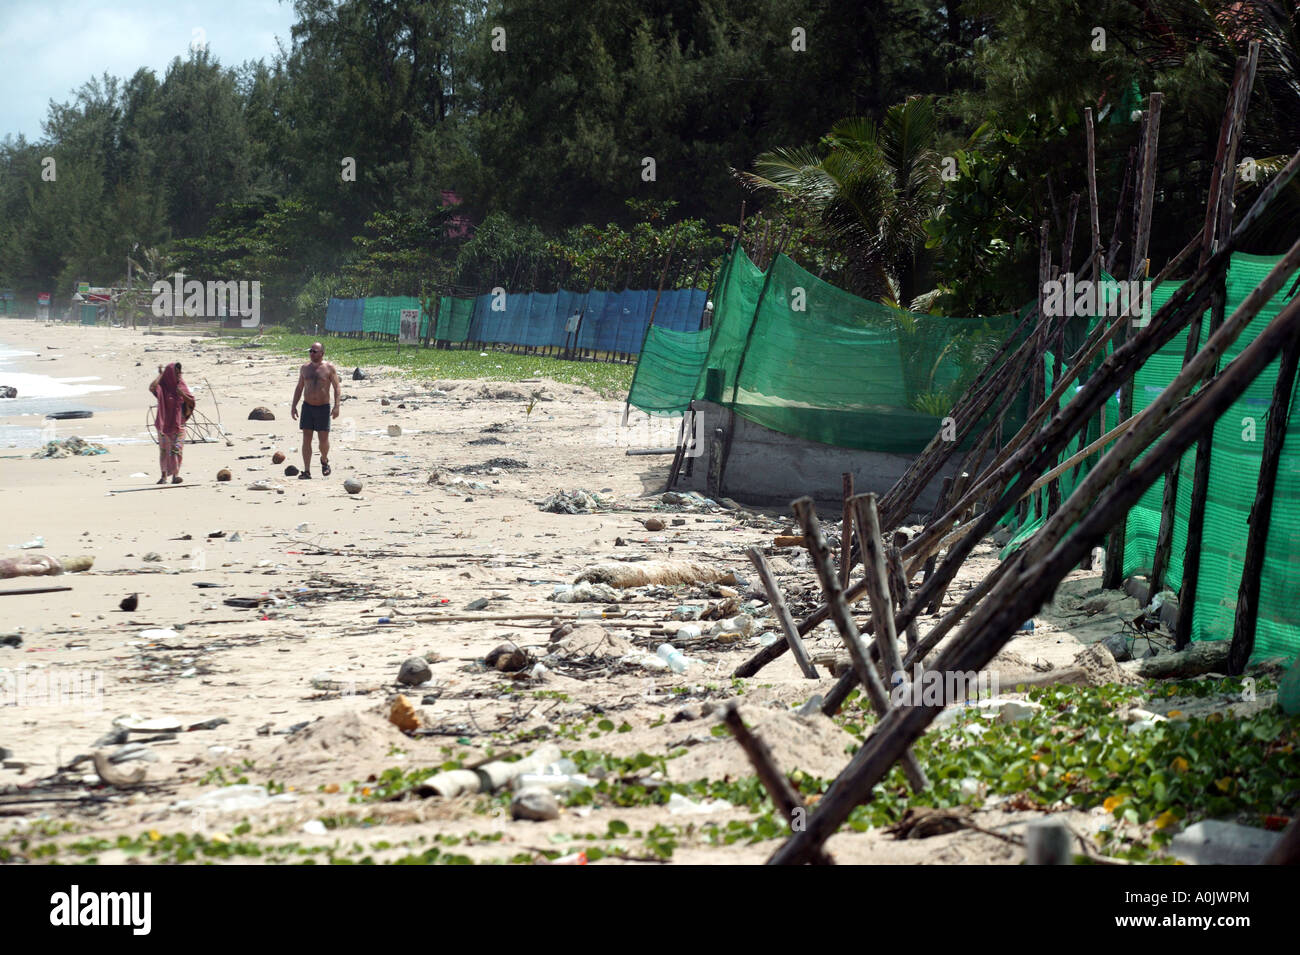 Deserted beach with refuse on the island of Koh Lanta Yai Ko Lanta Yai  Southern Thailand This area was hit by Tsunami in 2004 Stock Photo - Alamy